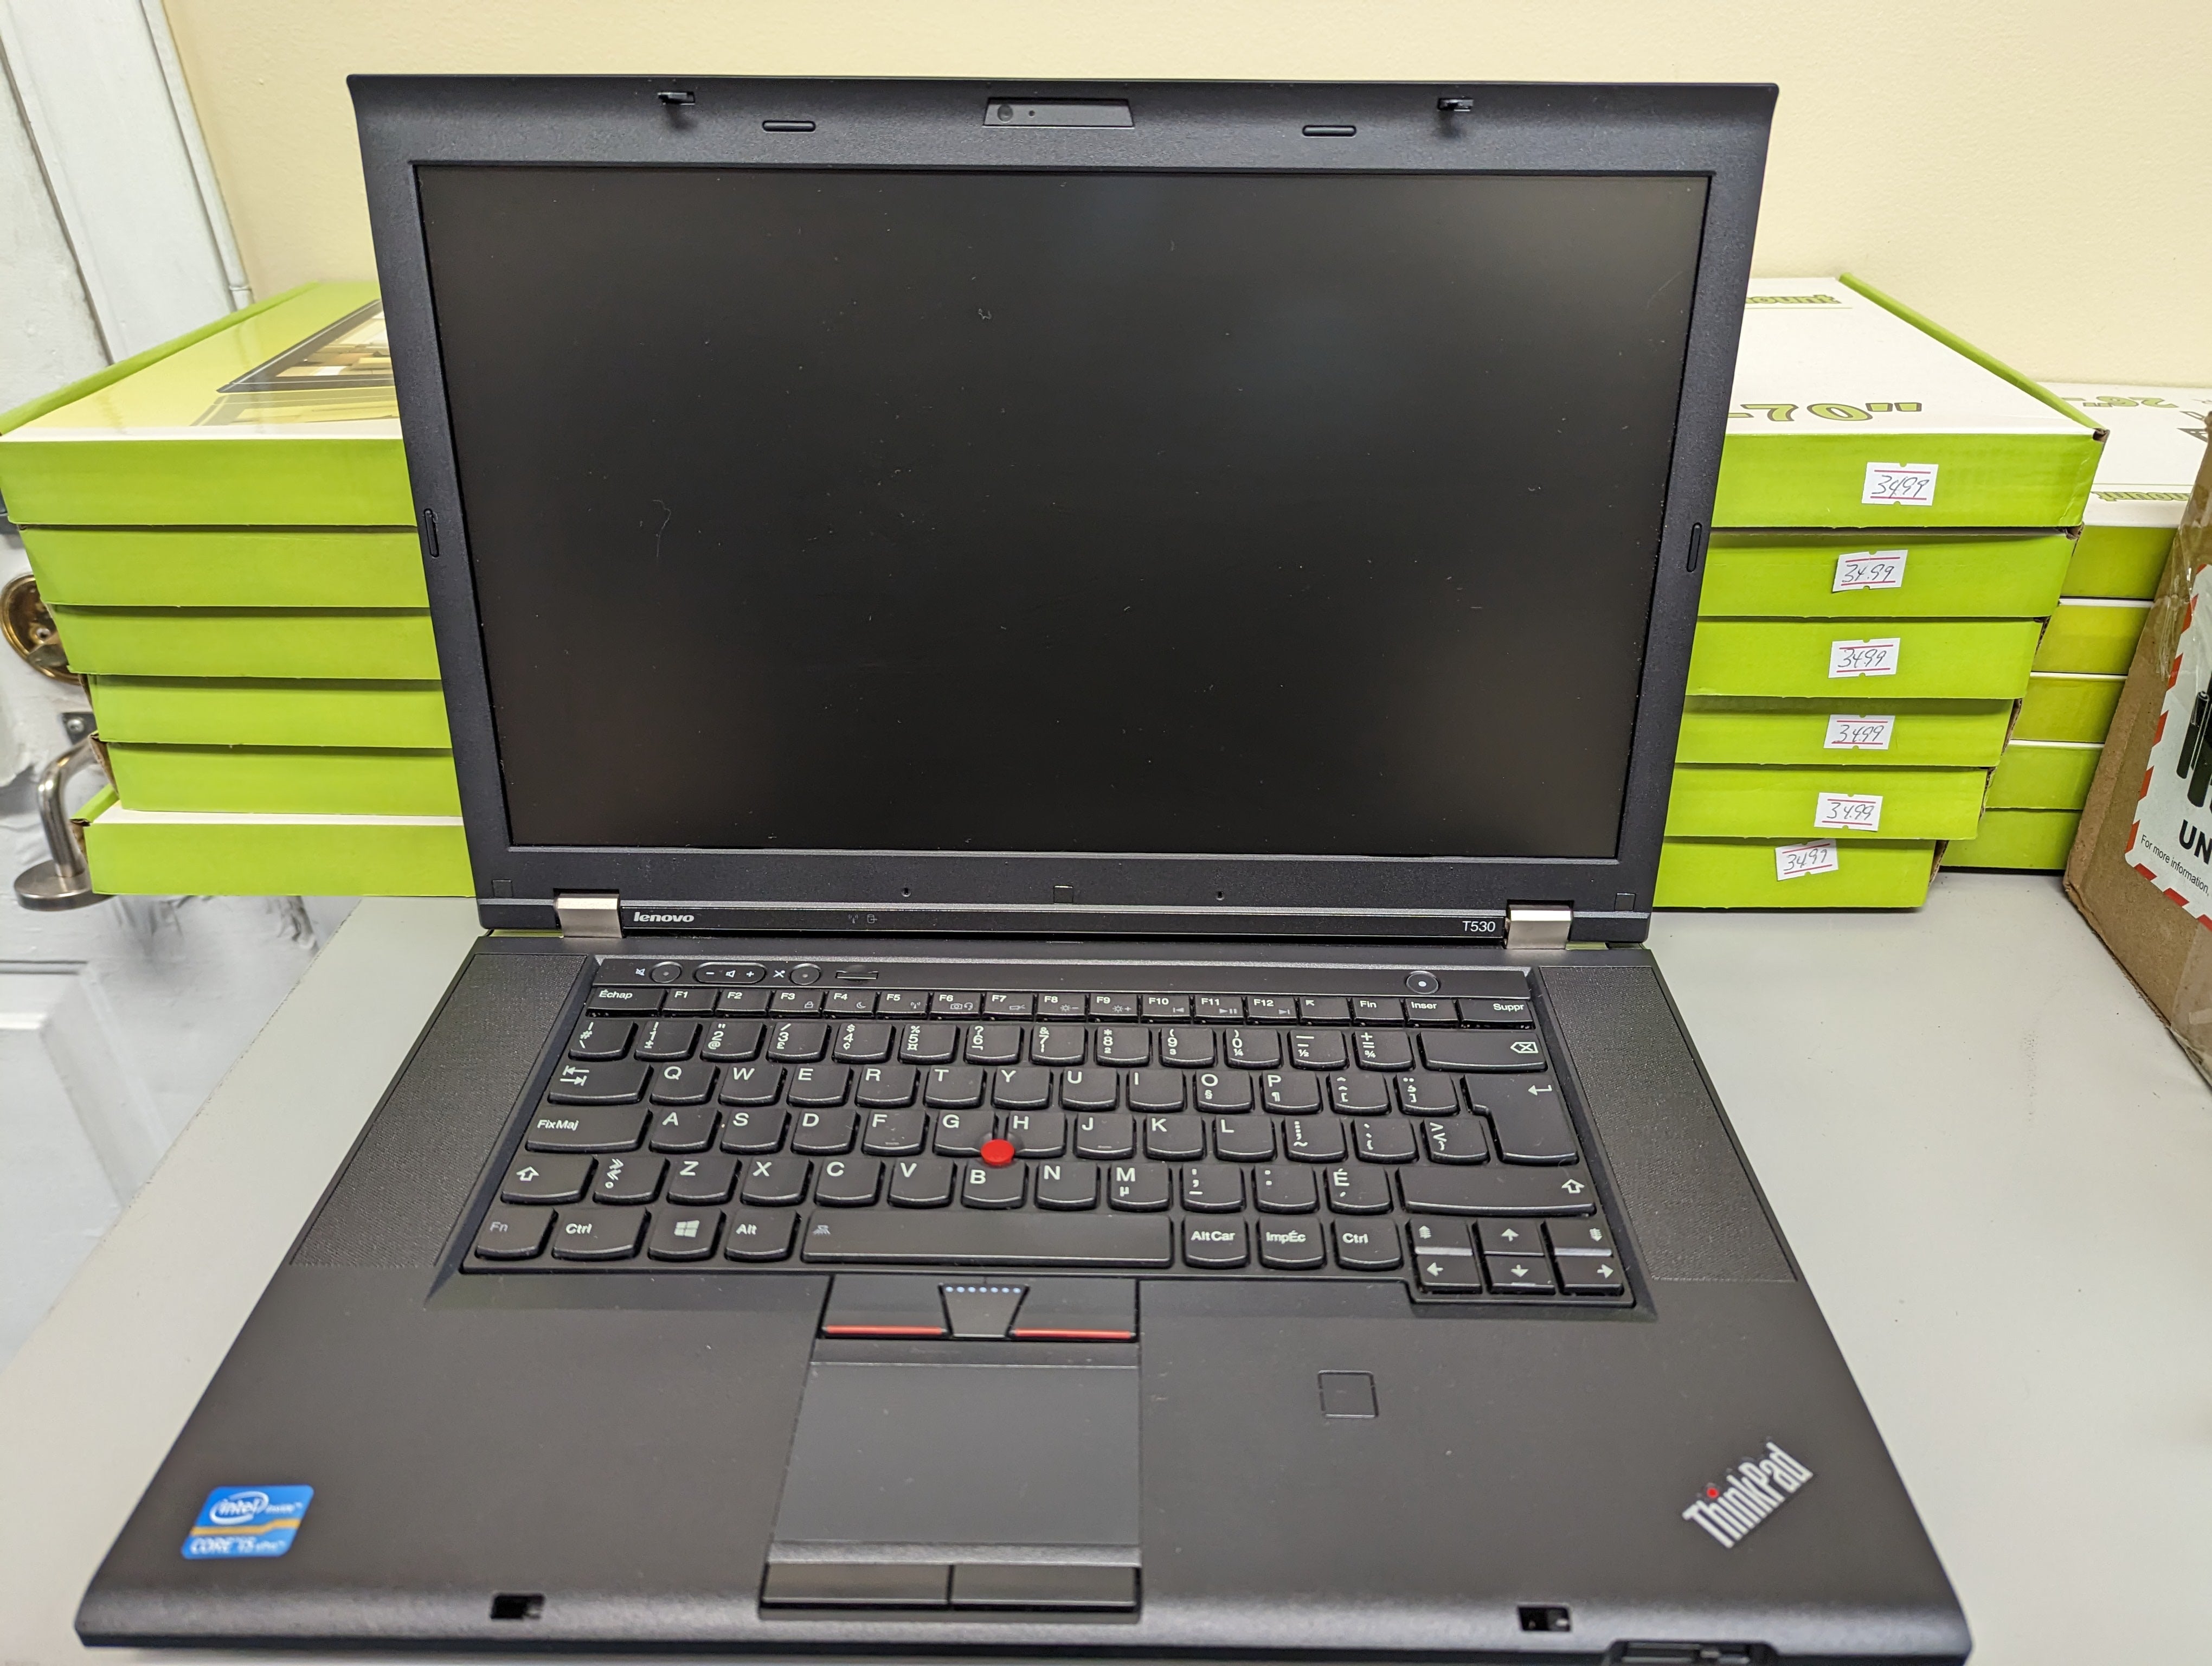 Lenovo ThinkPad T530 remis à neuf.